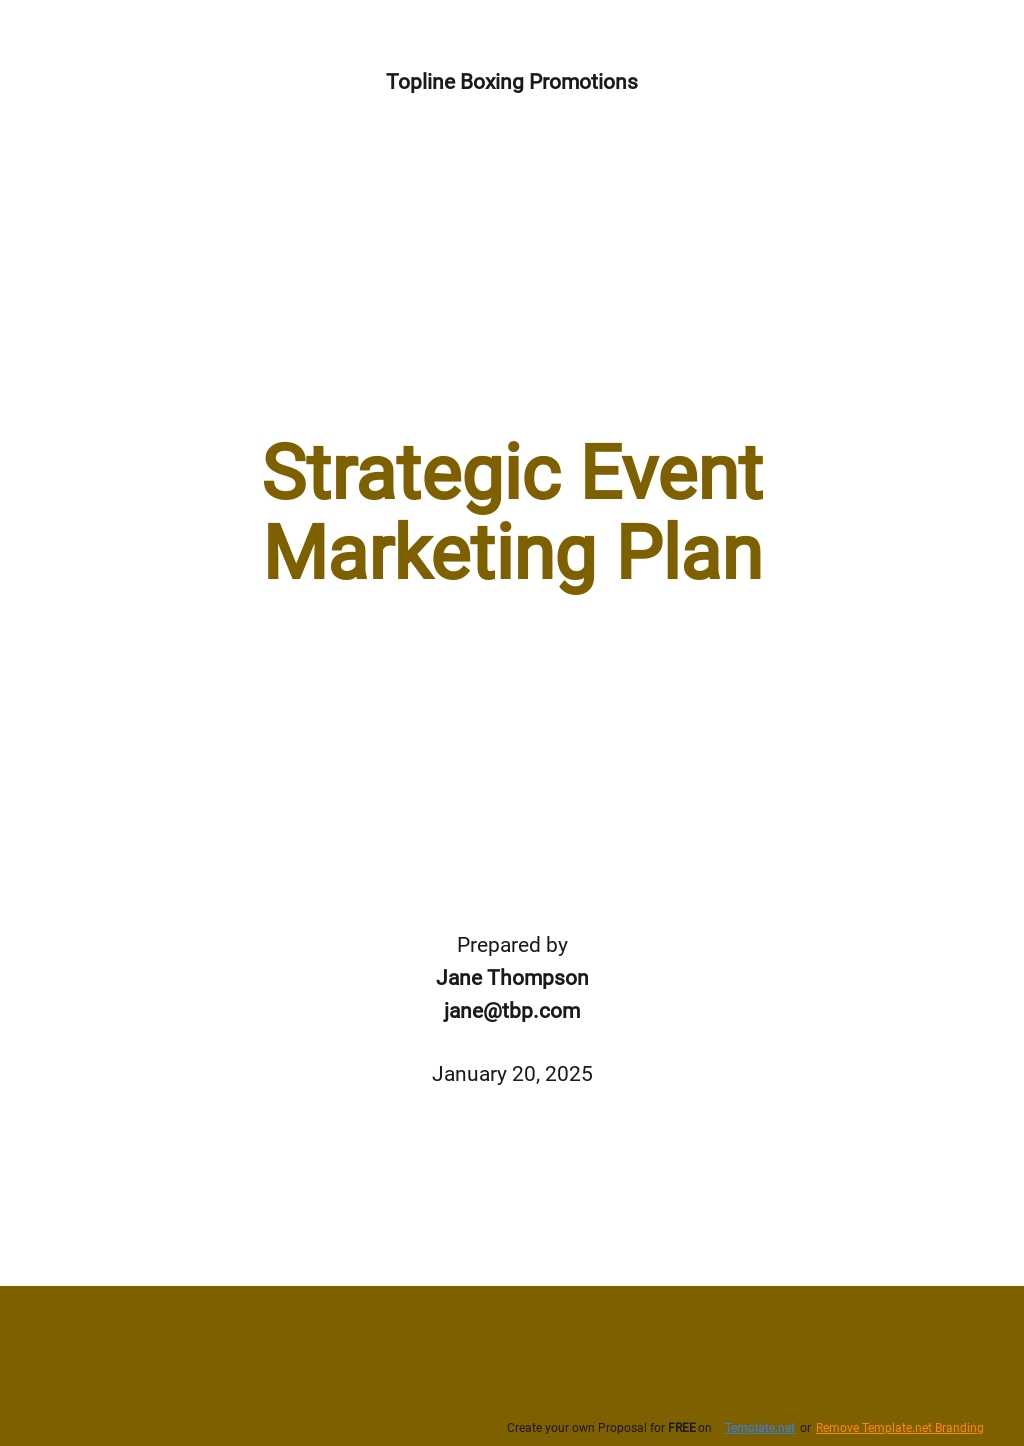 Strategic Event Marketing Plan Template